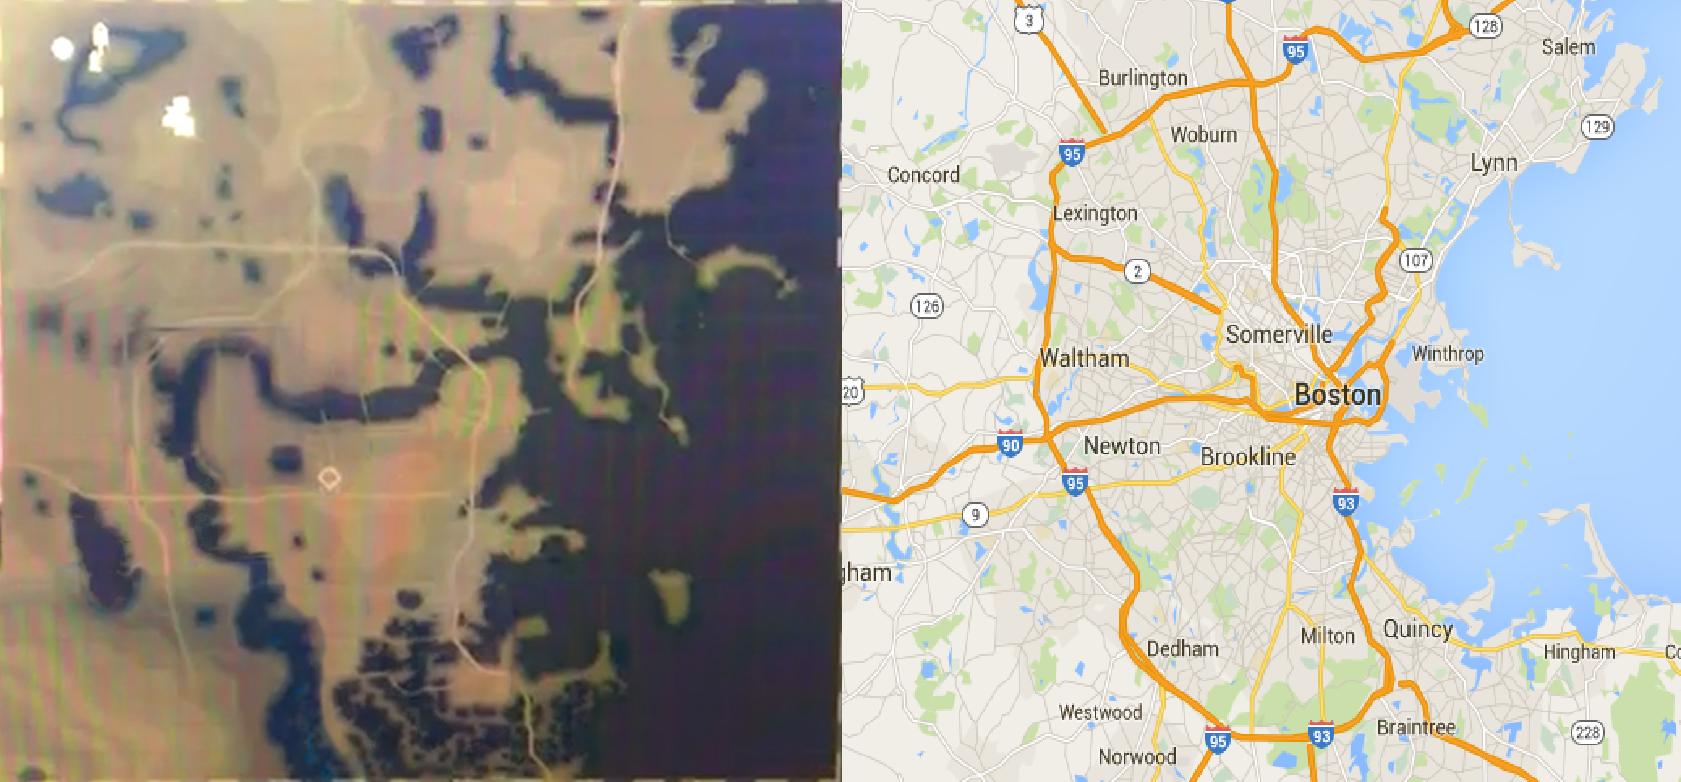 Fallout 4 Boston Map Vs Real Map Fallout 4 Map vs Real Life Boston City Map Comparison Shows Scale 